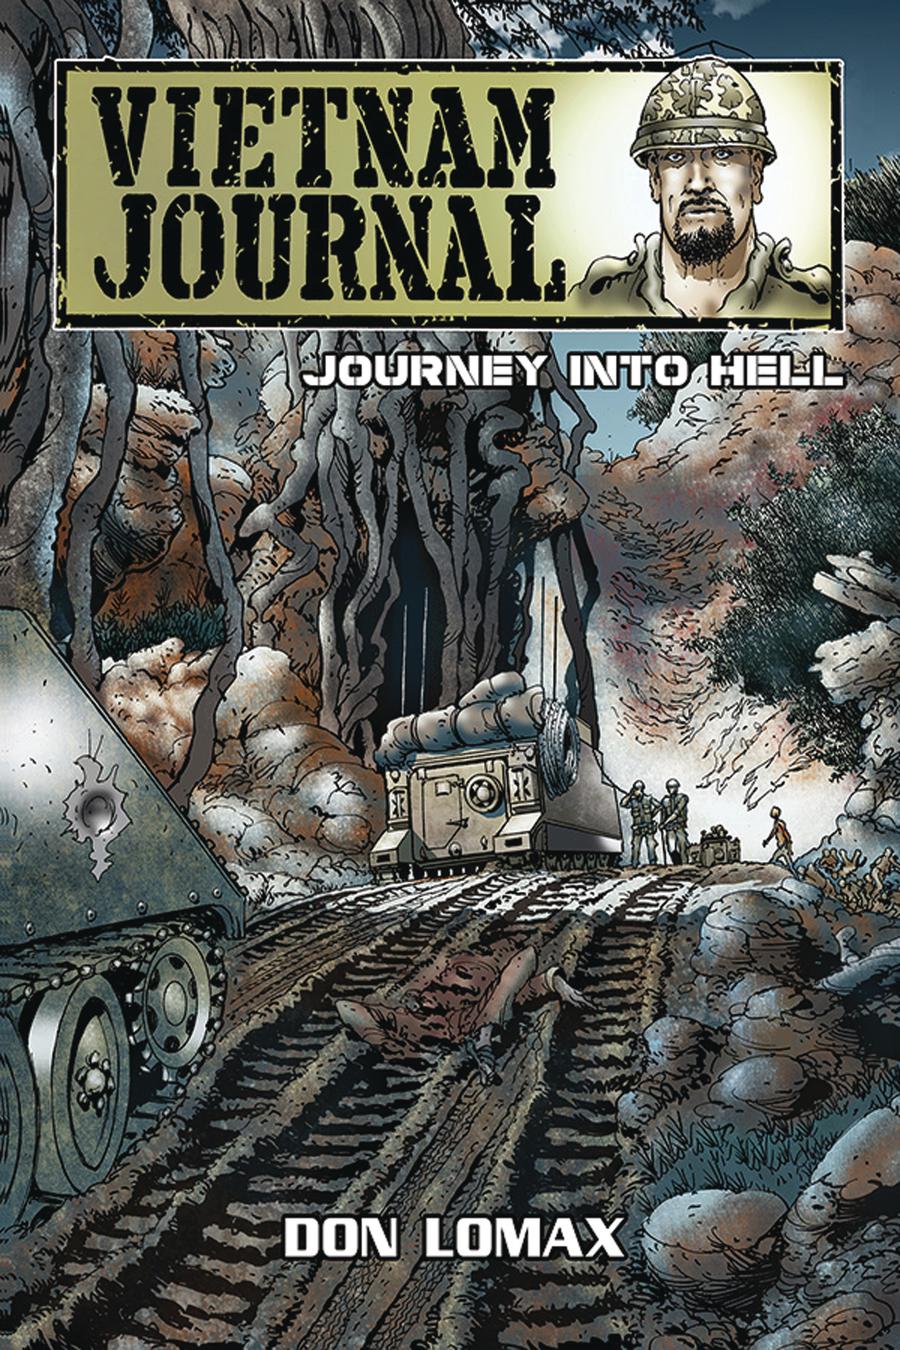 Vietnam Journal Series 2 Vol 2 Journey Into Hell TP